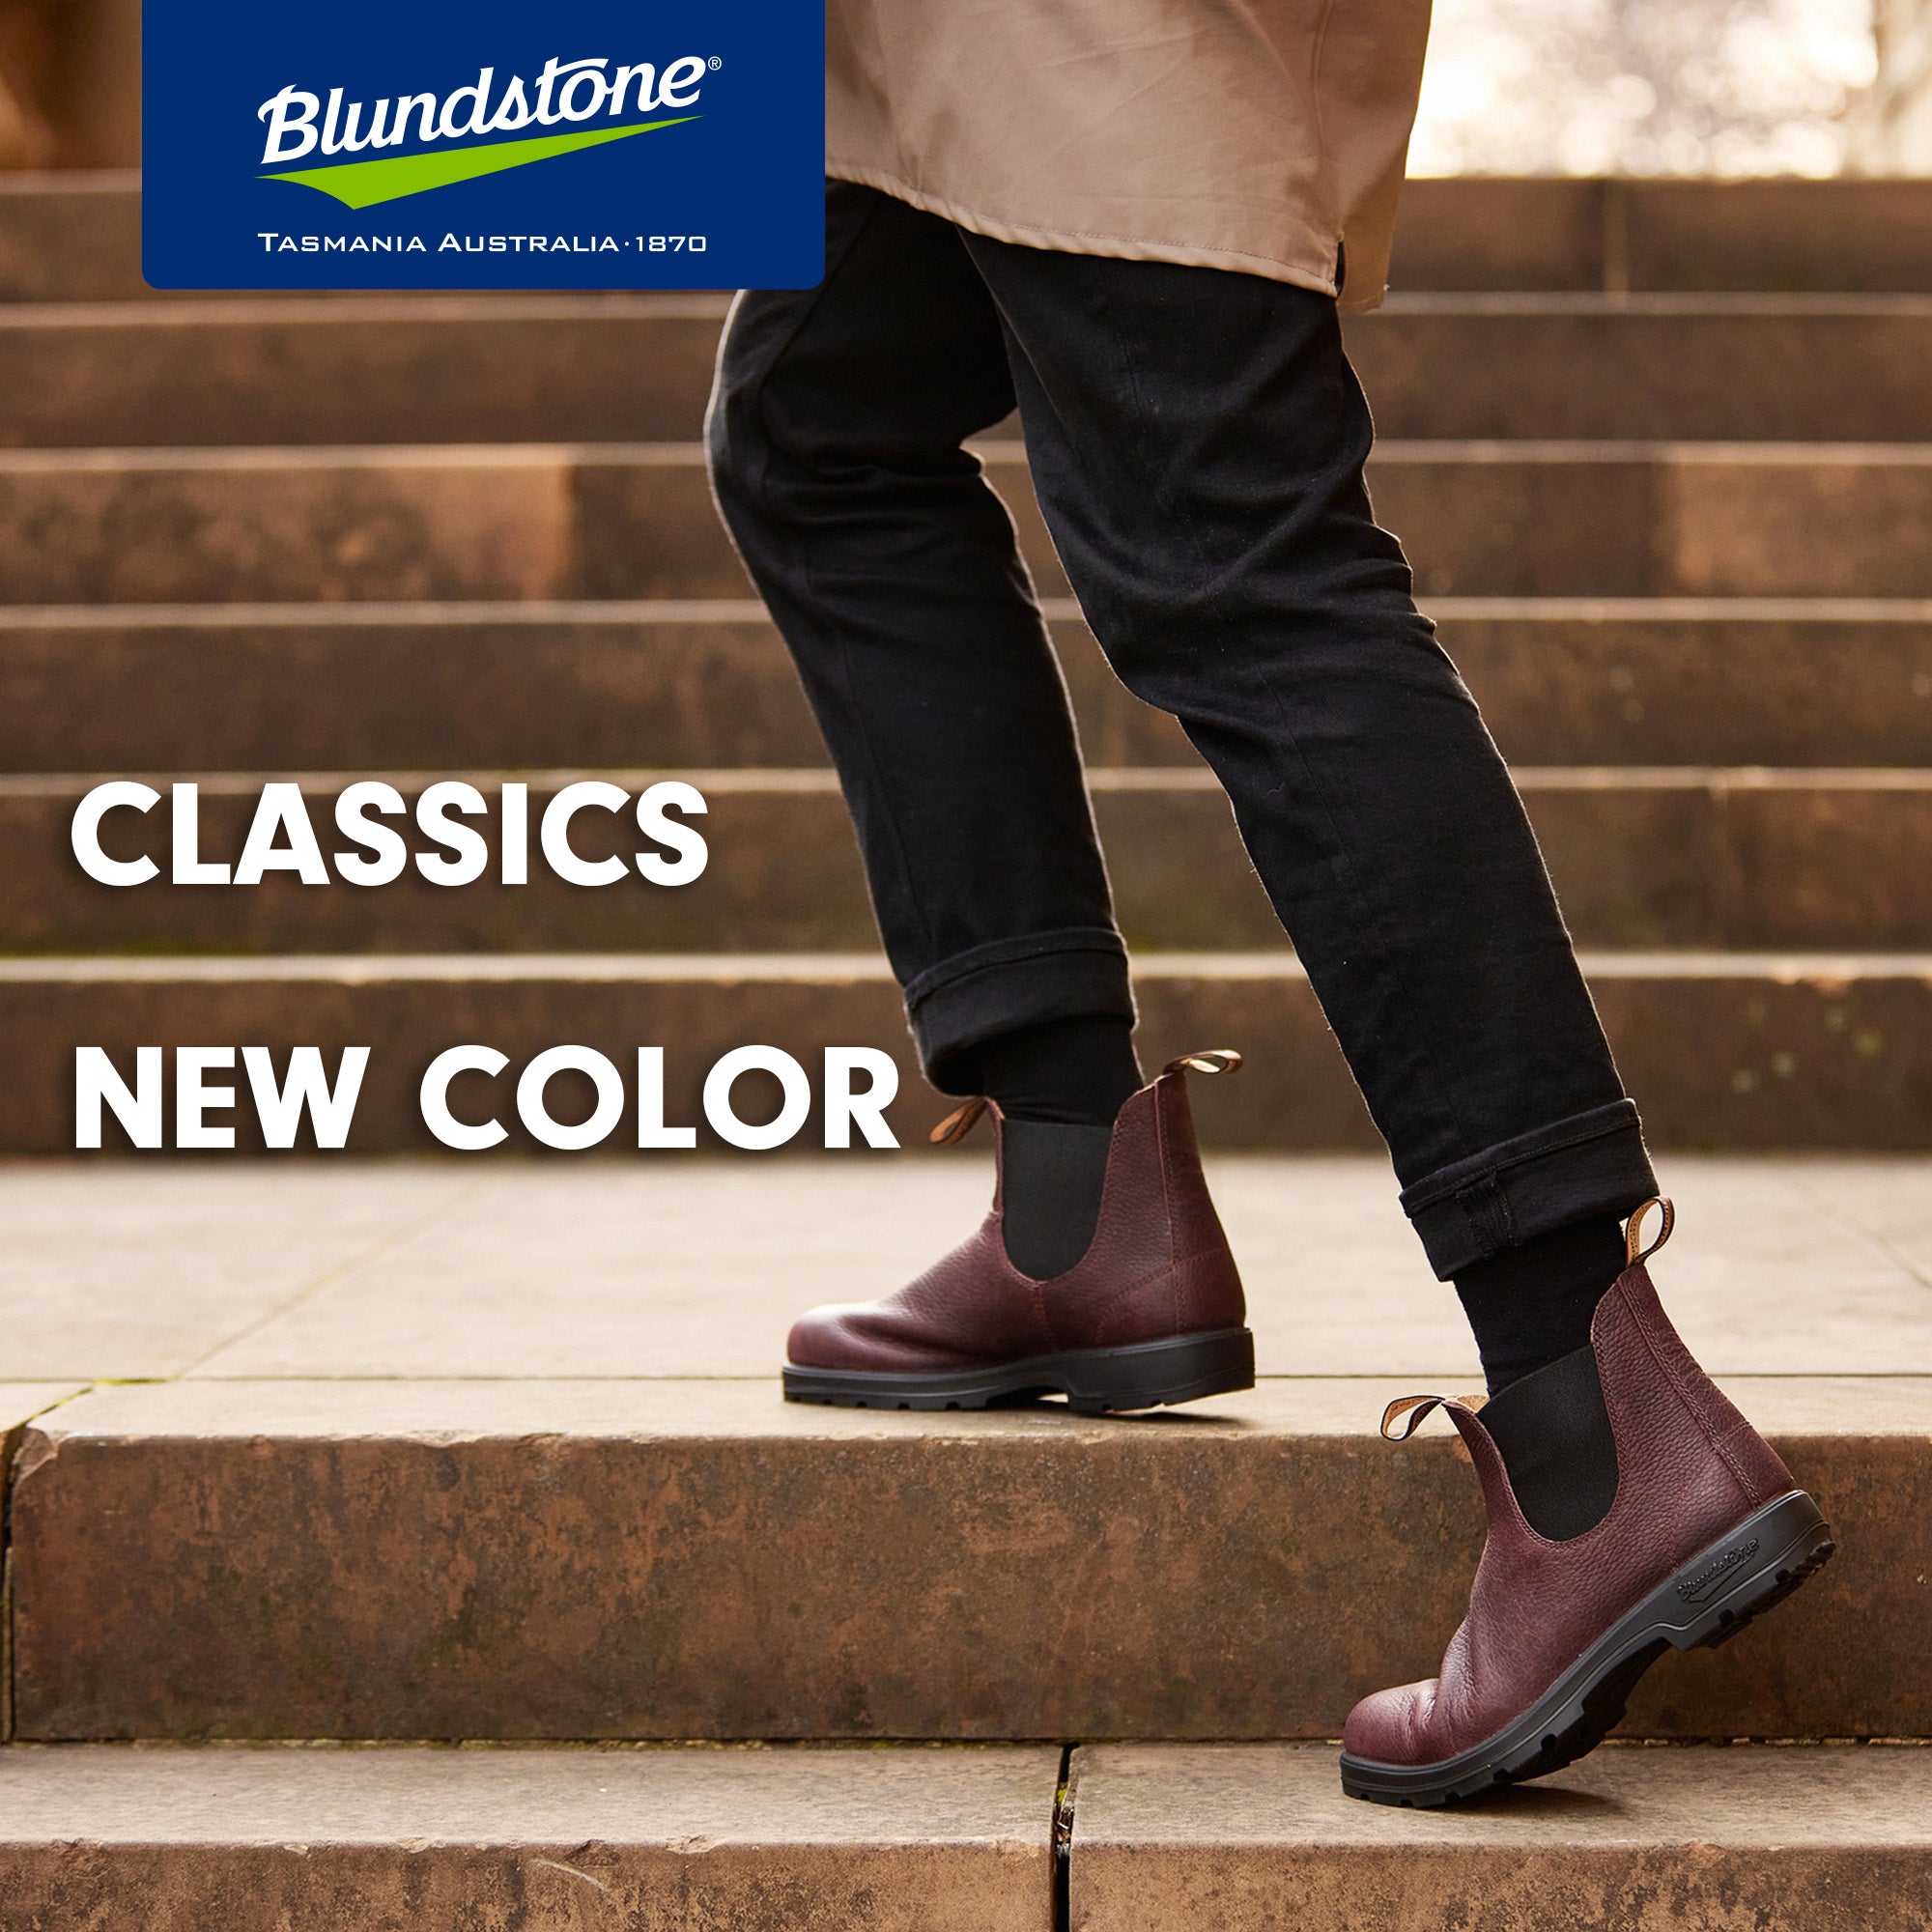 【Blundstone】“CLASSICS”にワイルドなシボ感が特徴の新色が登場！